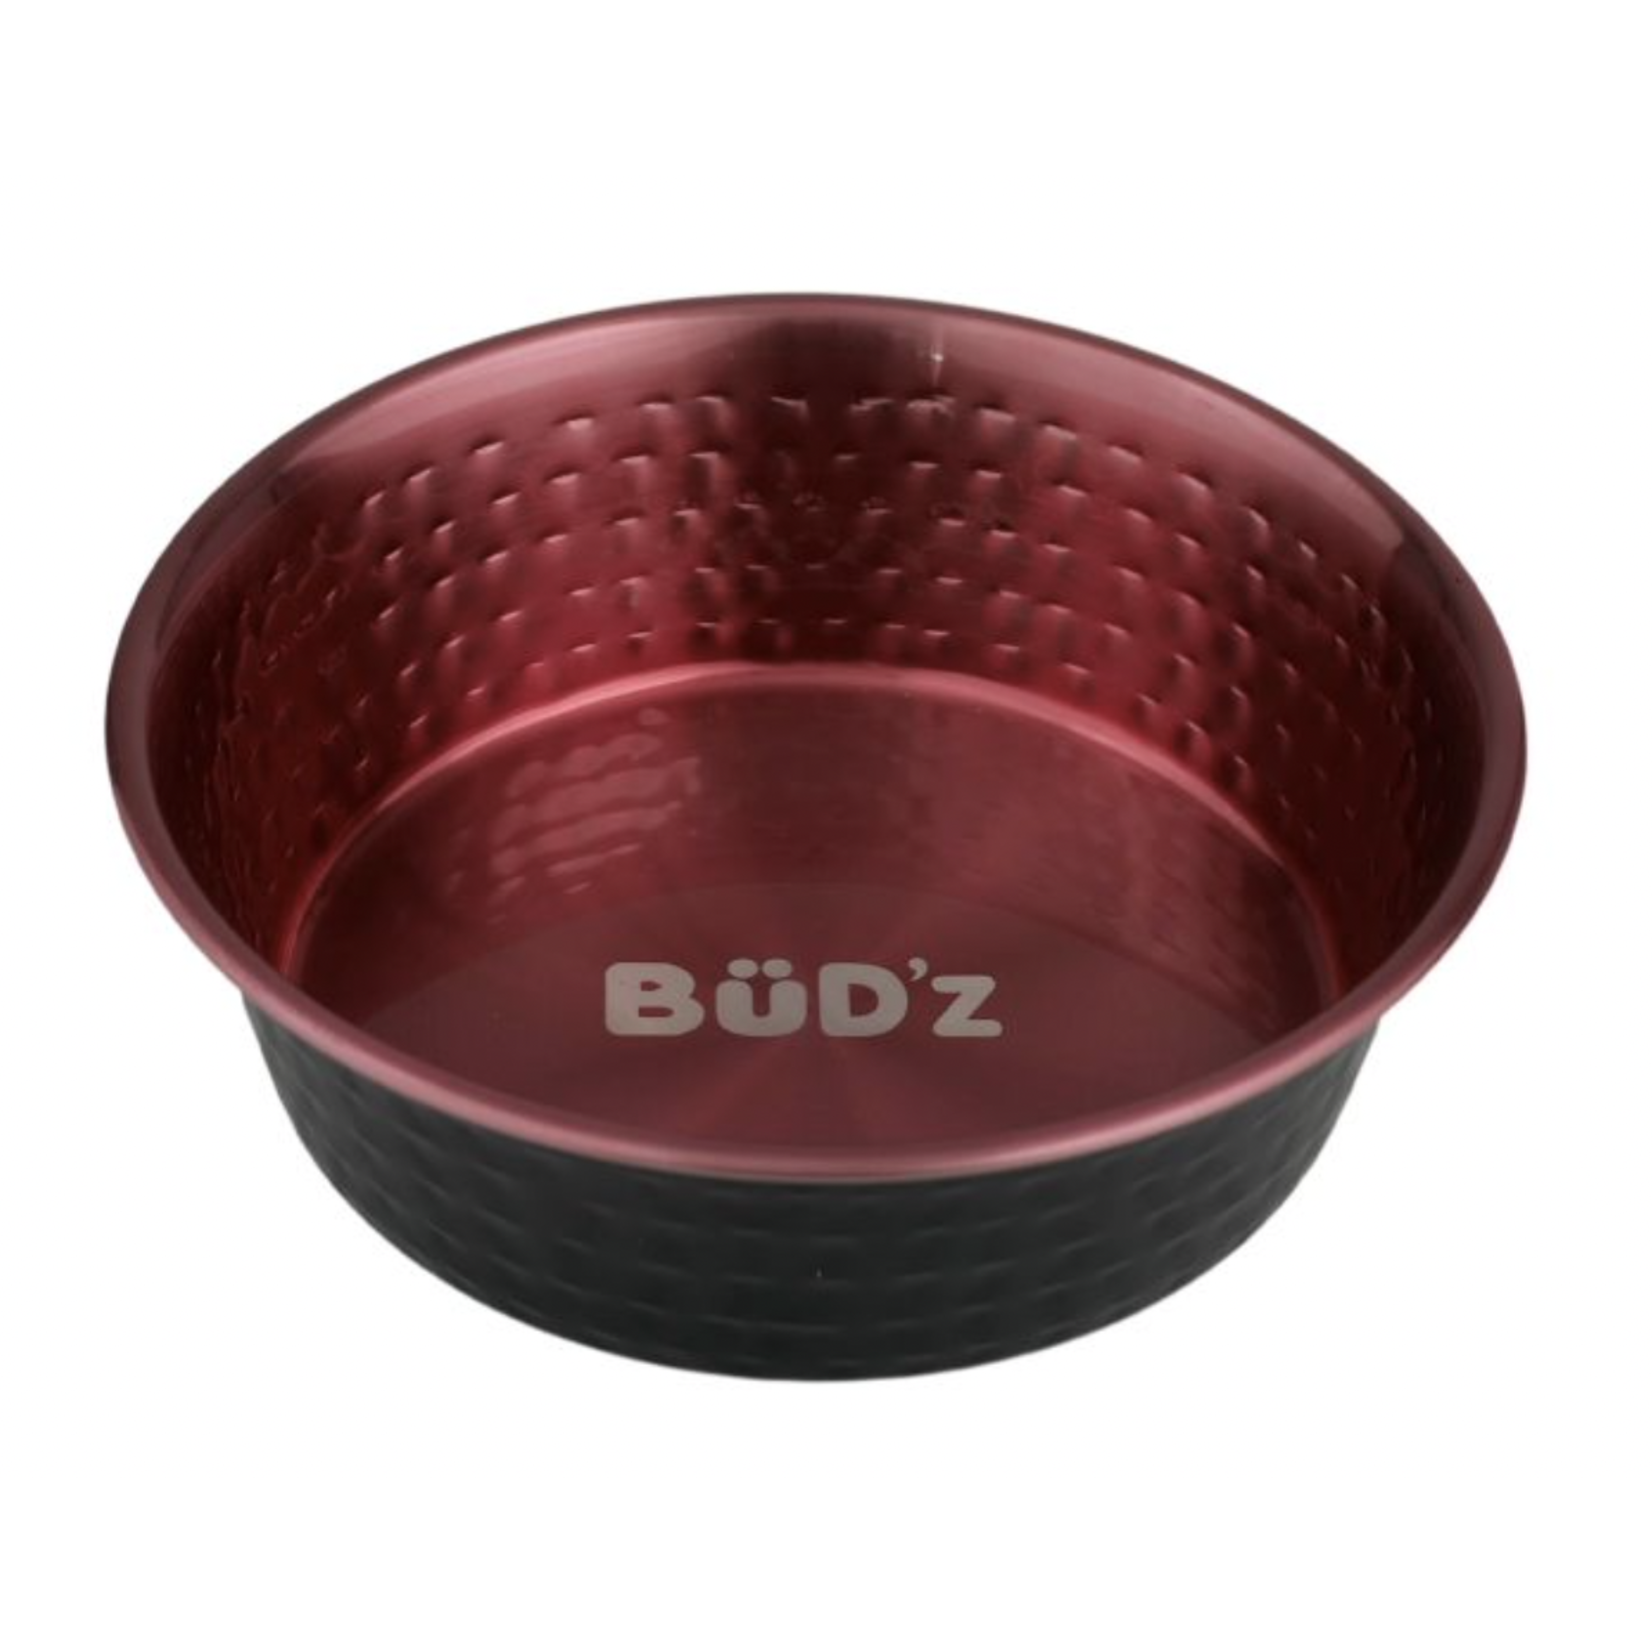 BUD-Z BUD'Z STAINLESS STEEL BOWL, HAMMERED INTERIOR - PINK 3900ml (132oz)